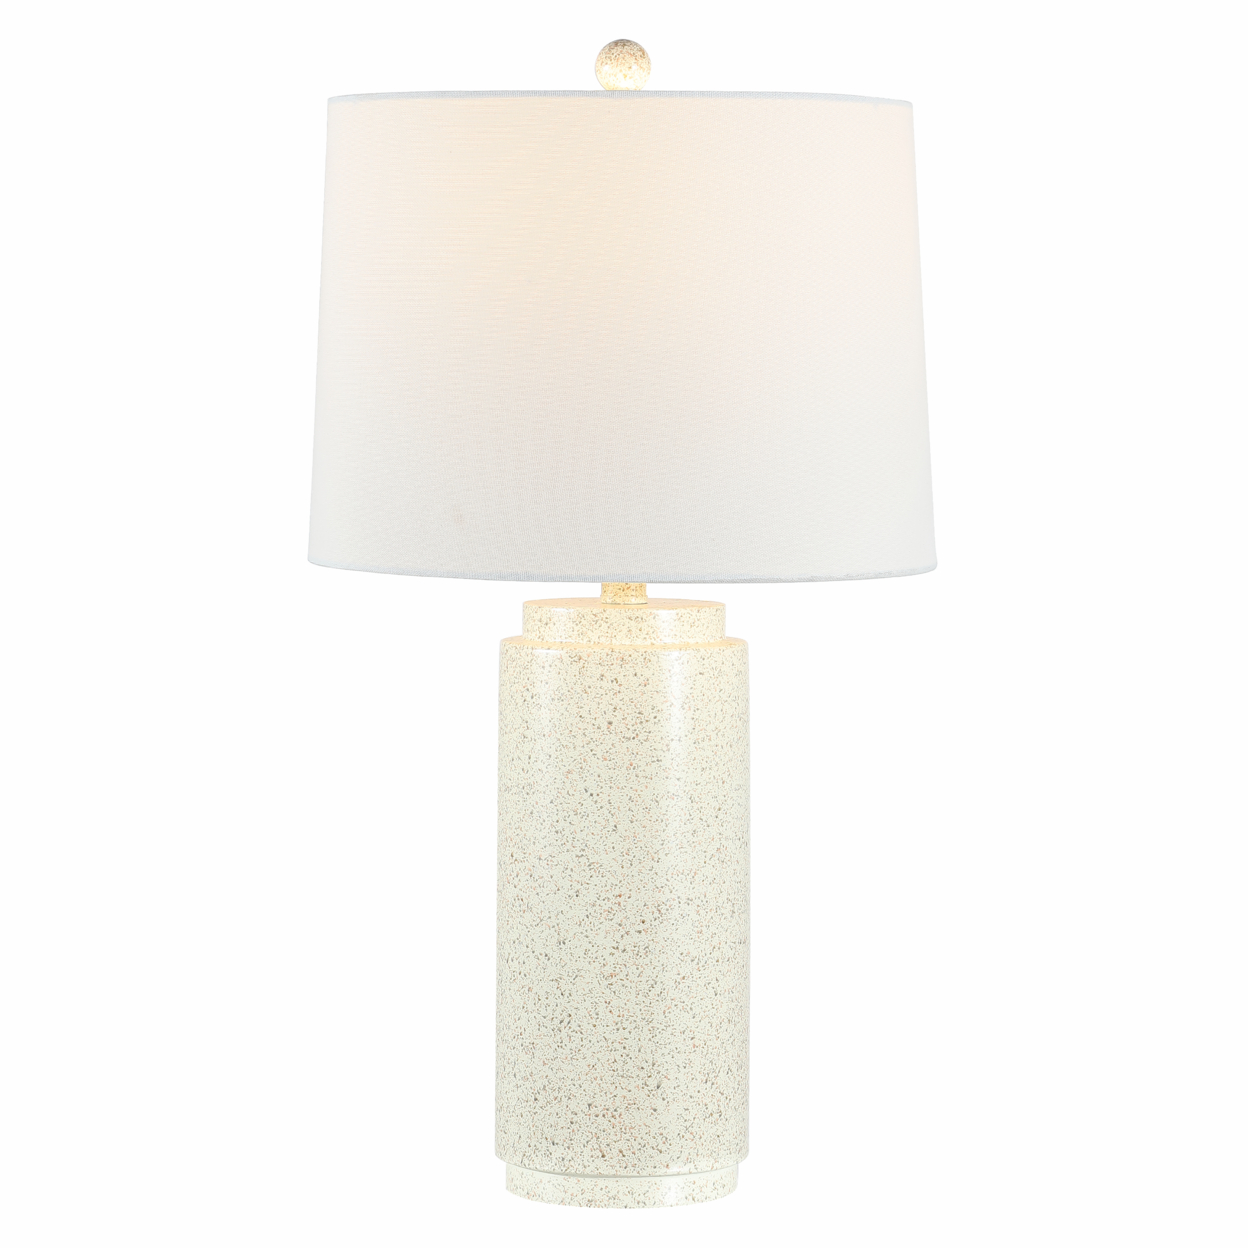 SAFAVIEH Silla 25.5 Table Lamp , White / Grey ,